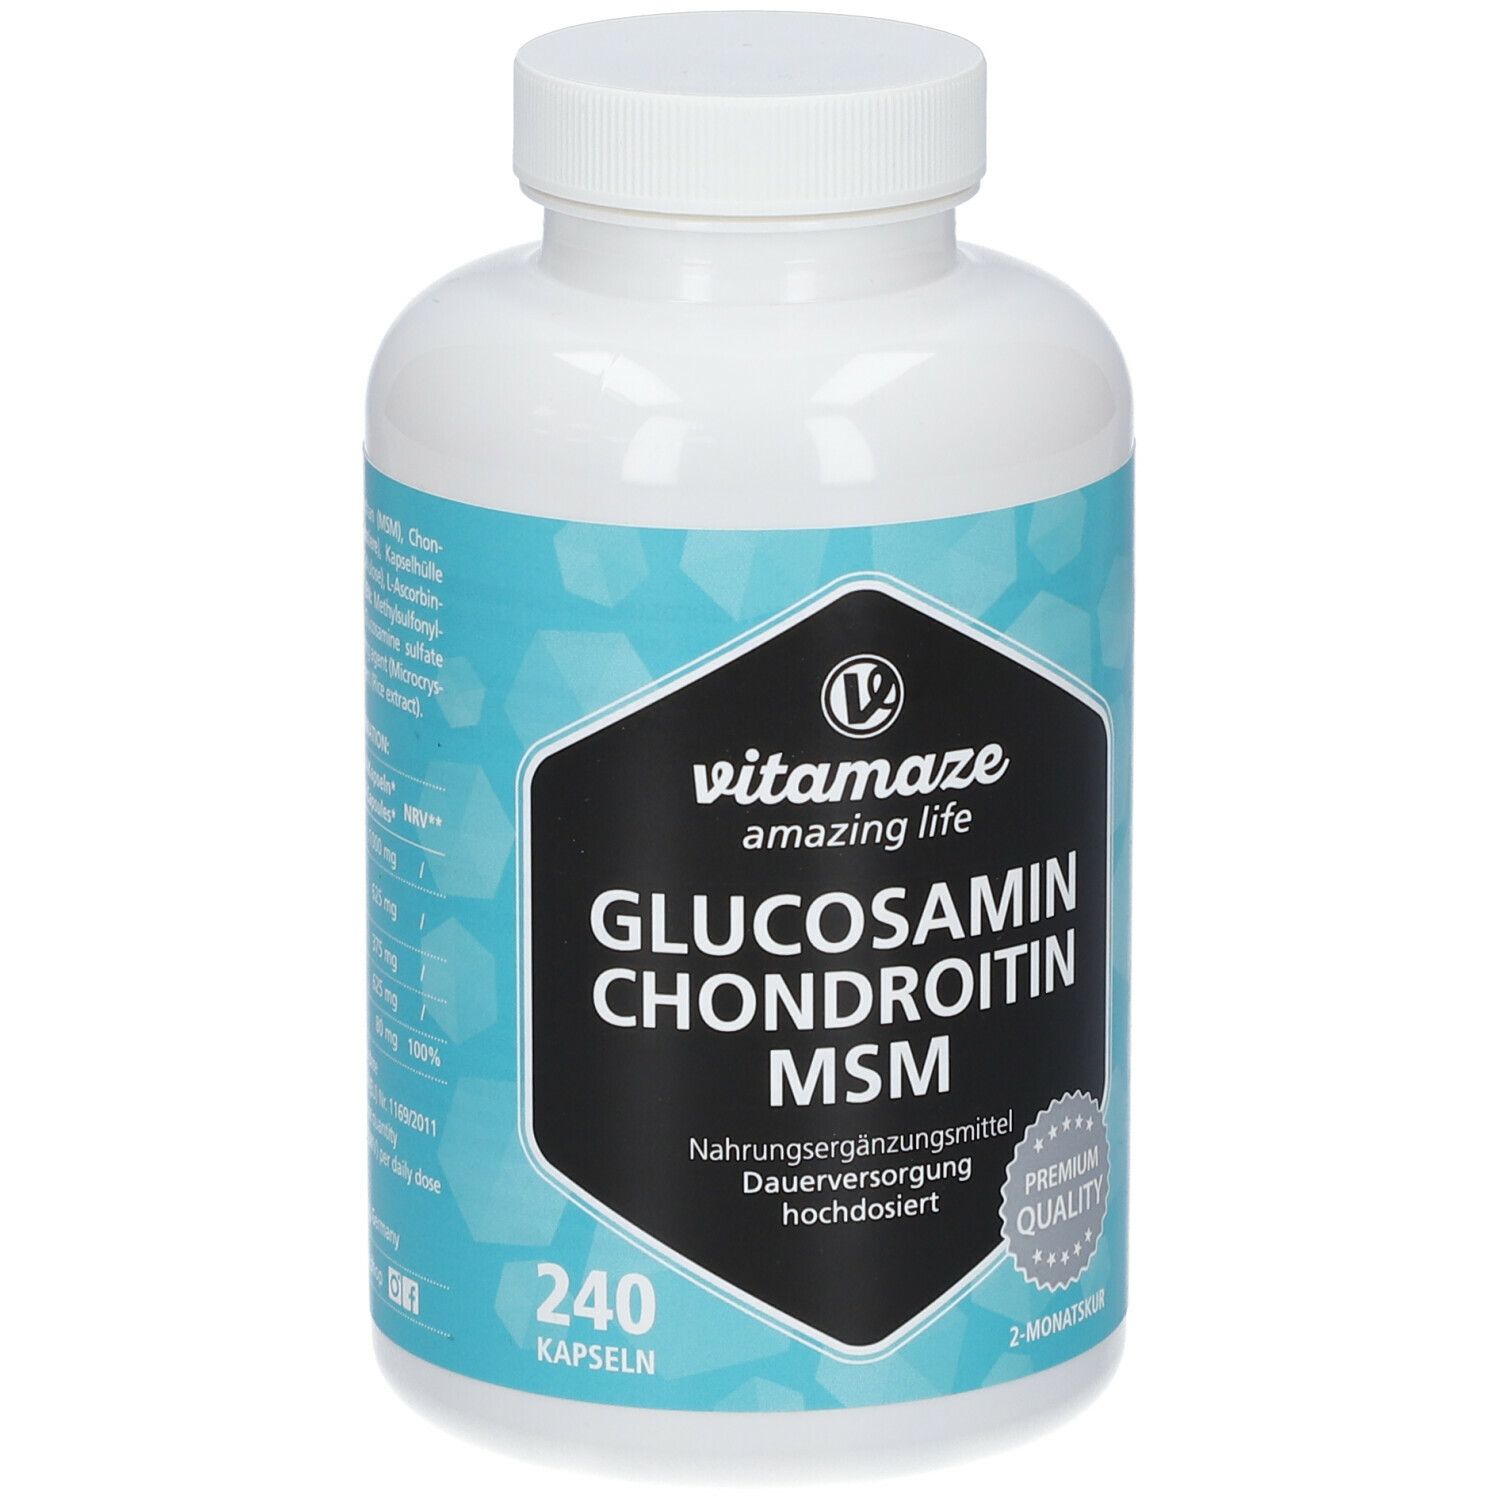 GLUCOSAMIN CHONDROITIN MSM Vitamin C